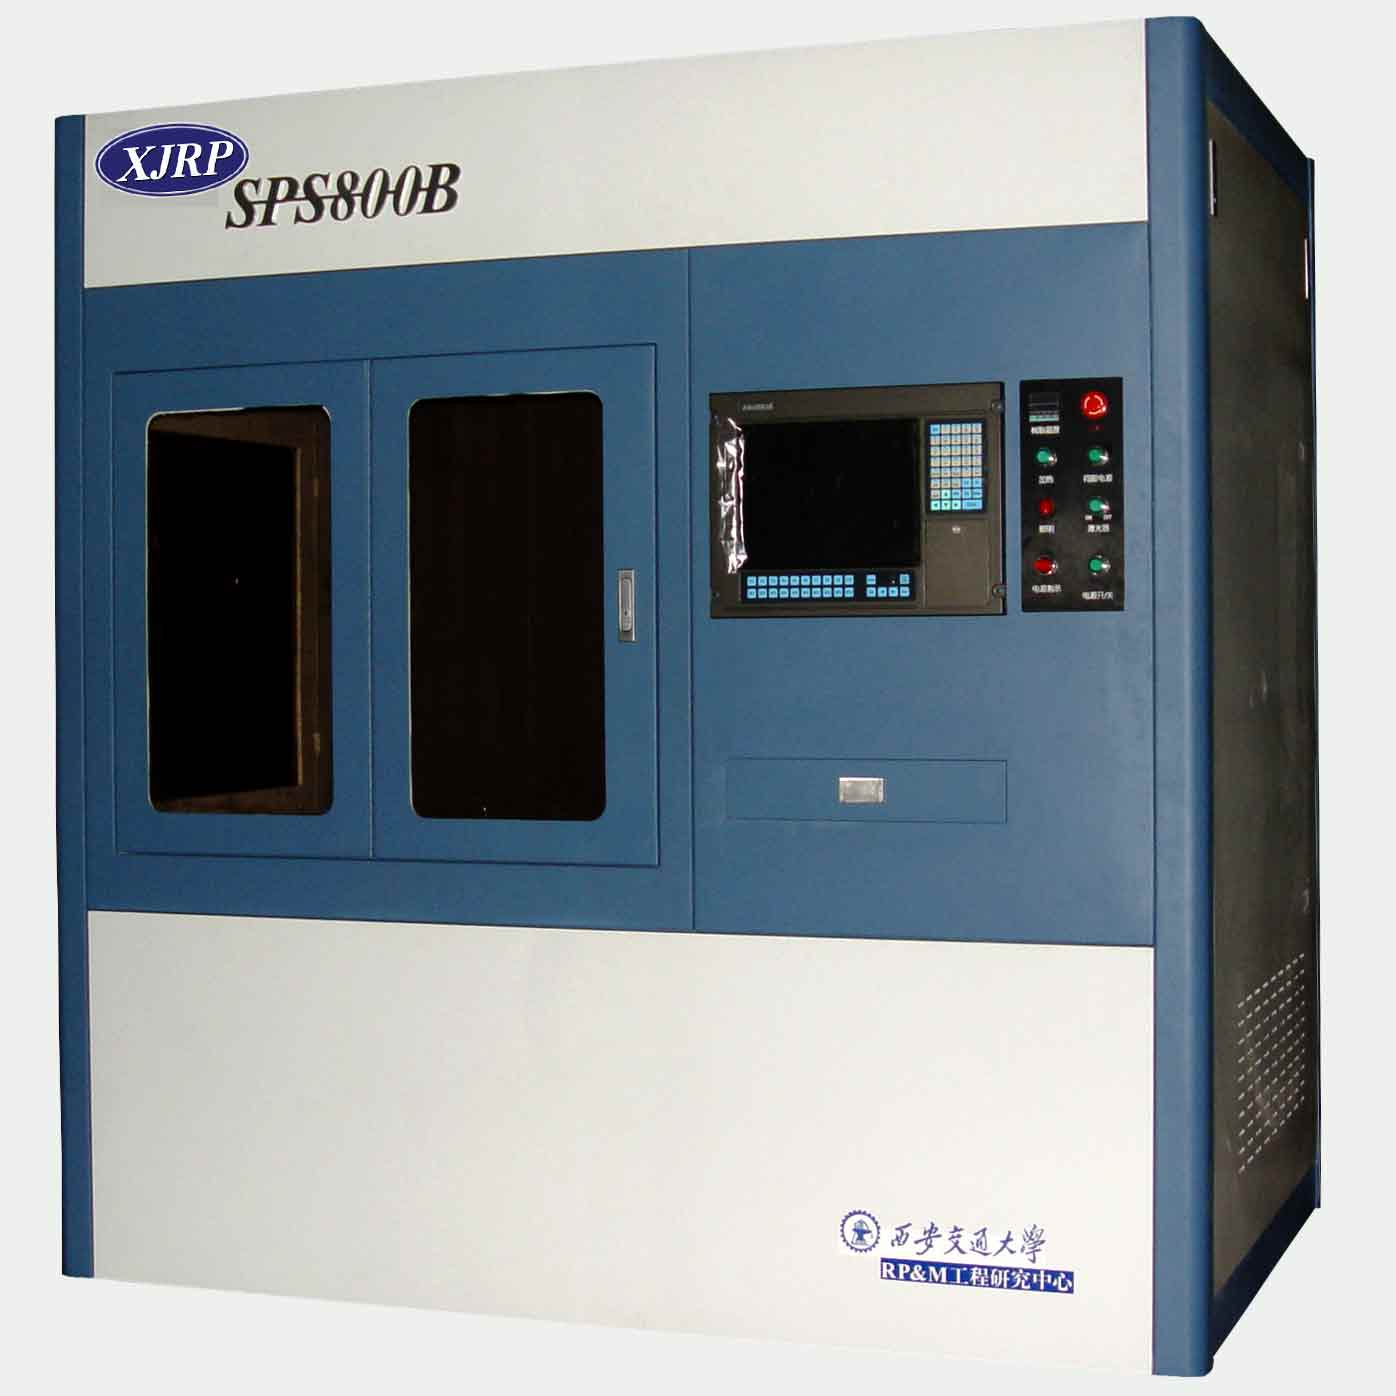 SPS Laser Rapid Prototyping Machine